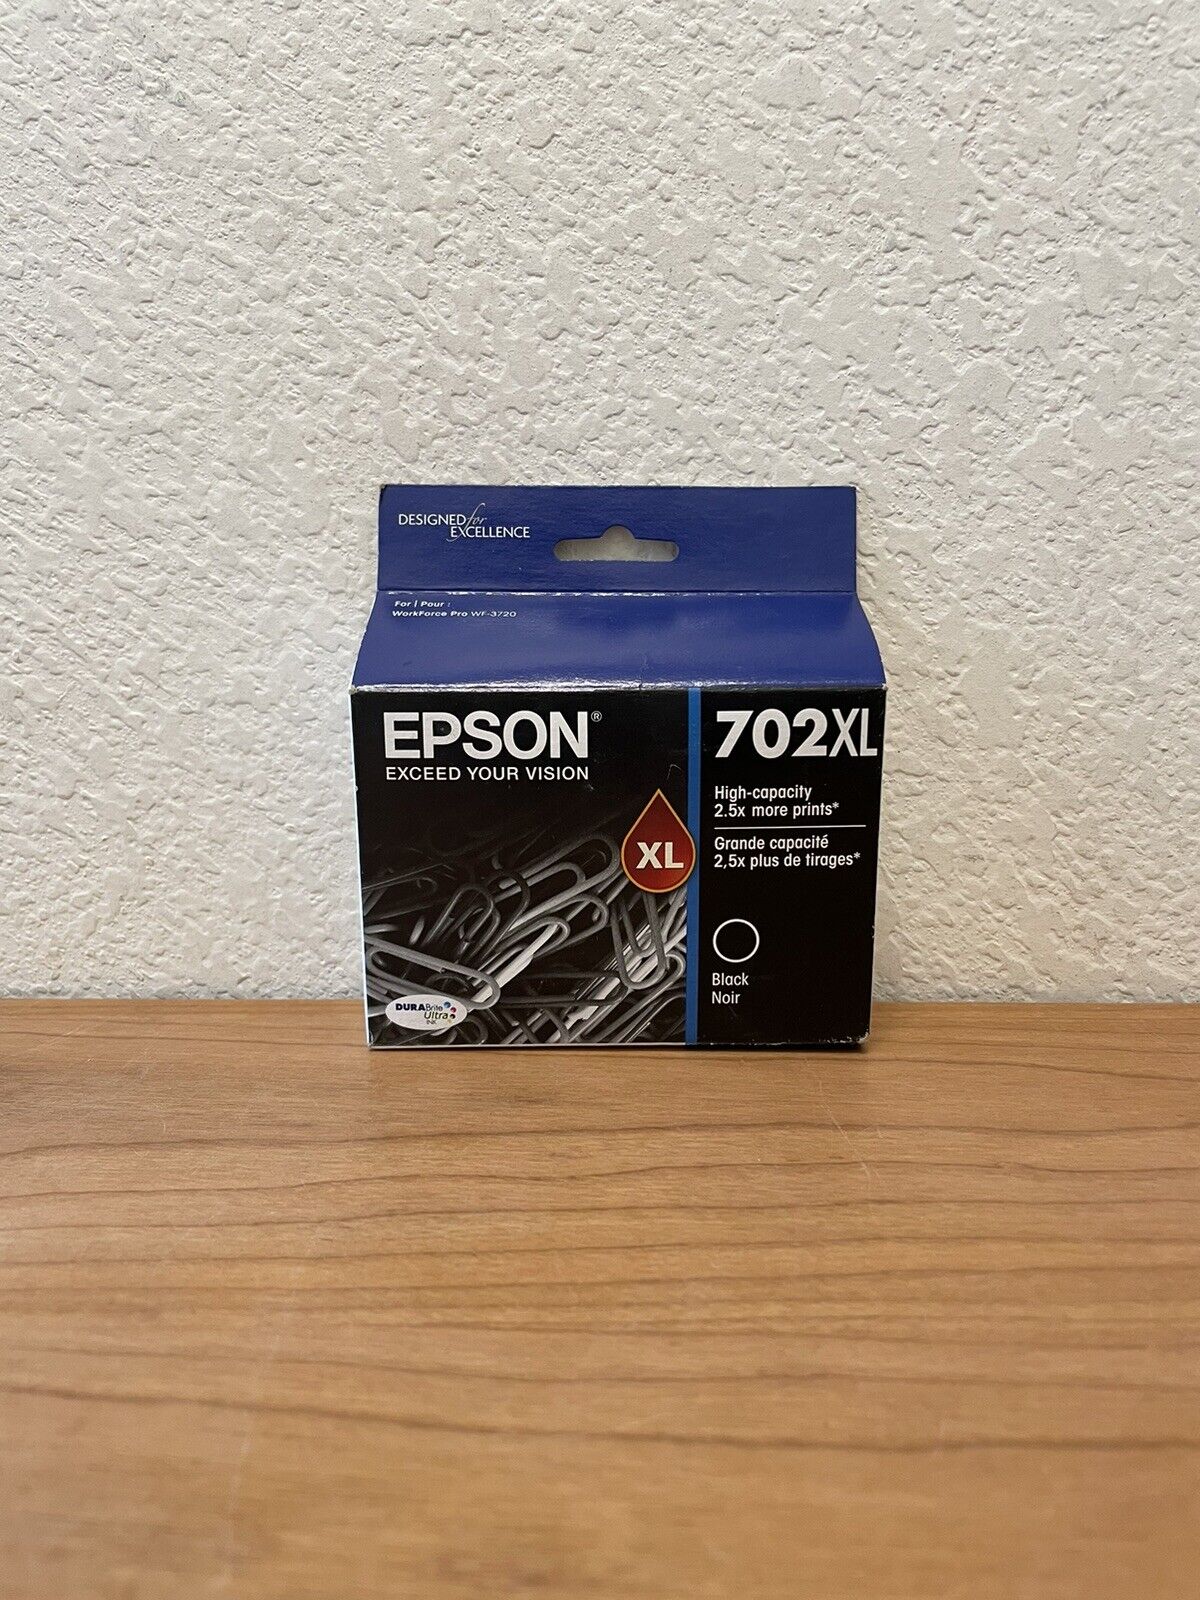 NEW Epson 702XL DURABrite Ultra Black Ink Cartridge (EXP 03/2021) OEM